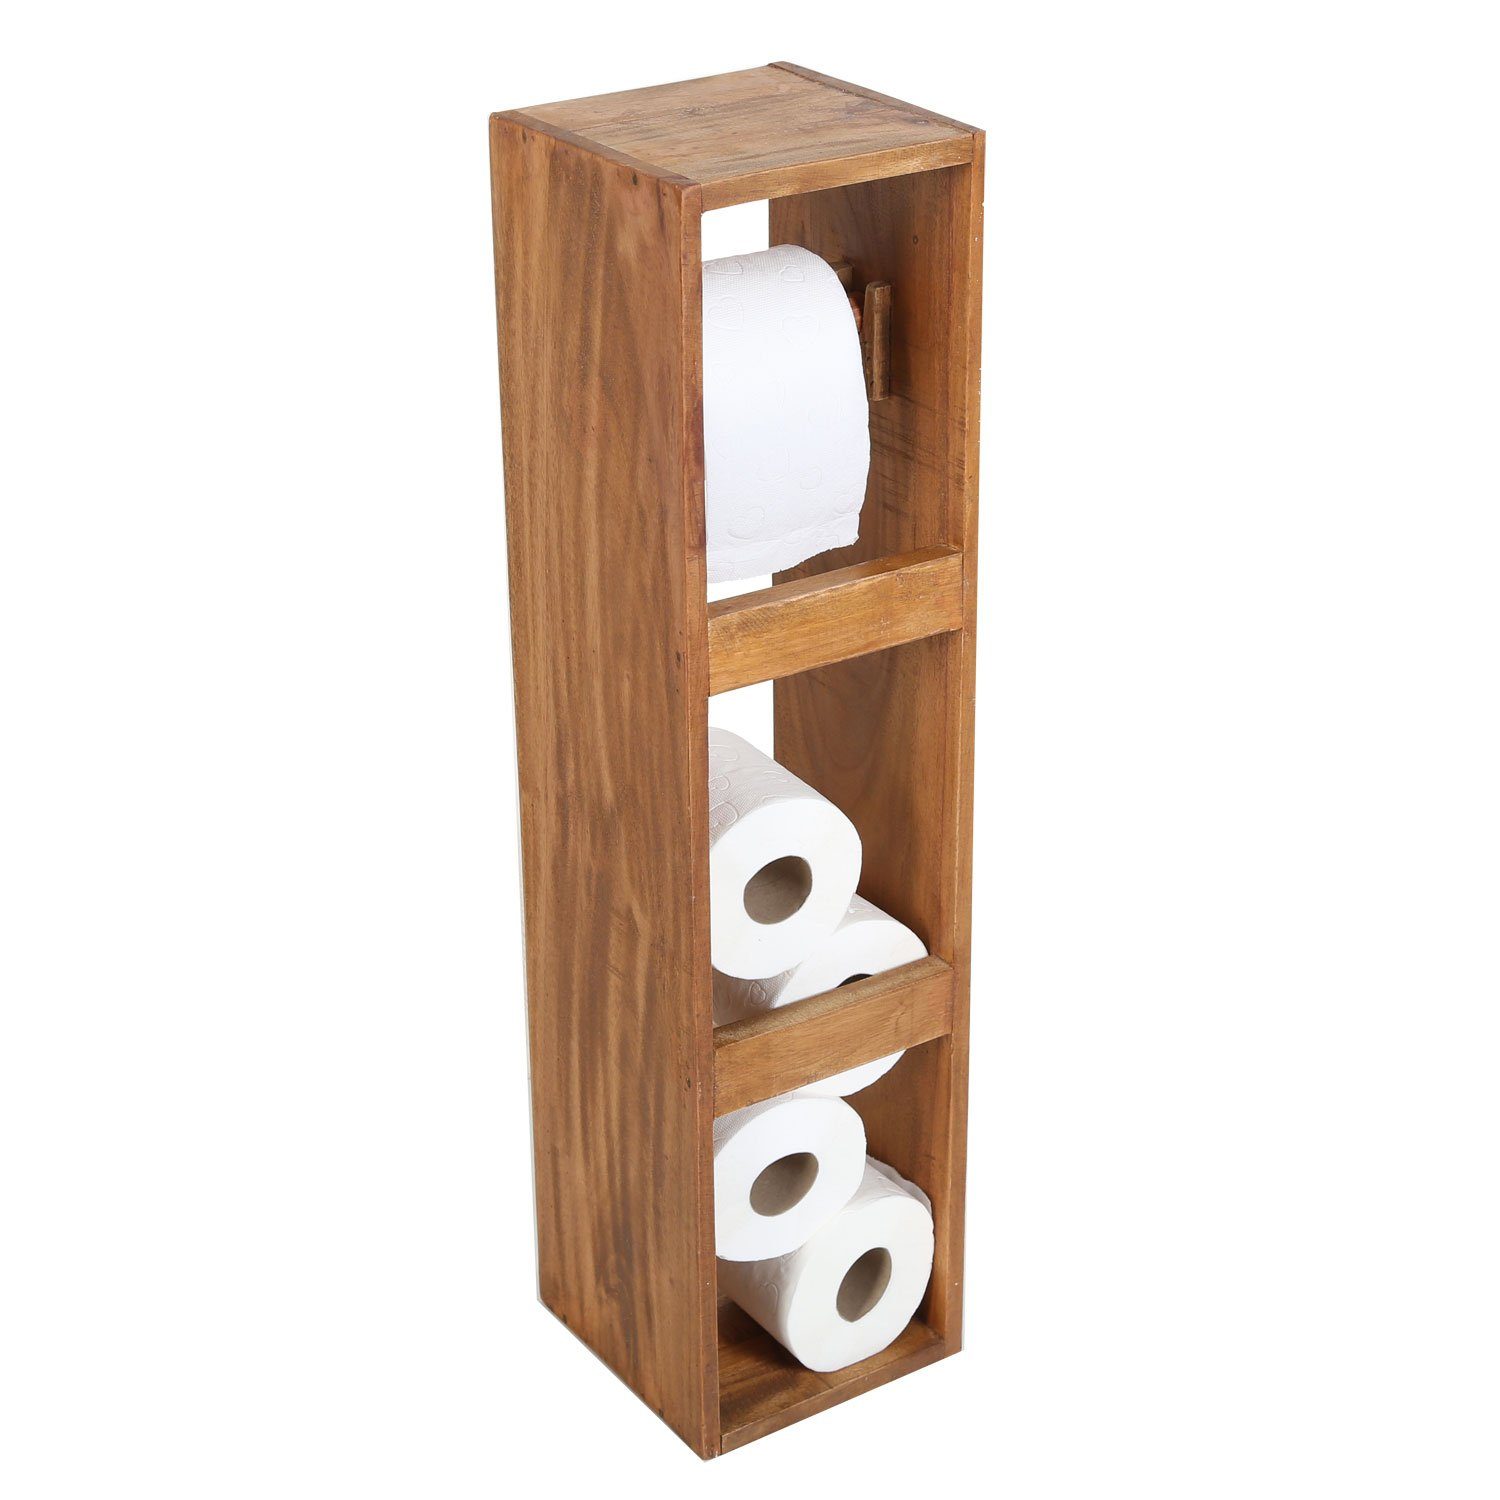 Casa Moro Toilettenpapierhalter Holz Toilettenpapierhalter ELISA Toilettenpapierständer, aus recyceltem Teak Holz gefertigt